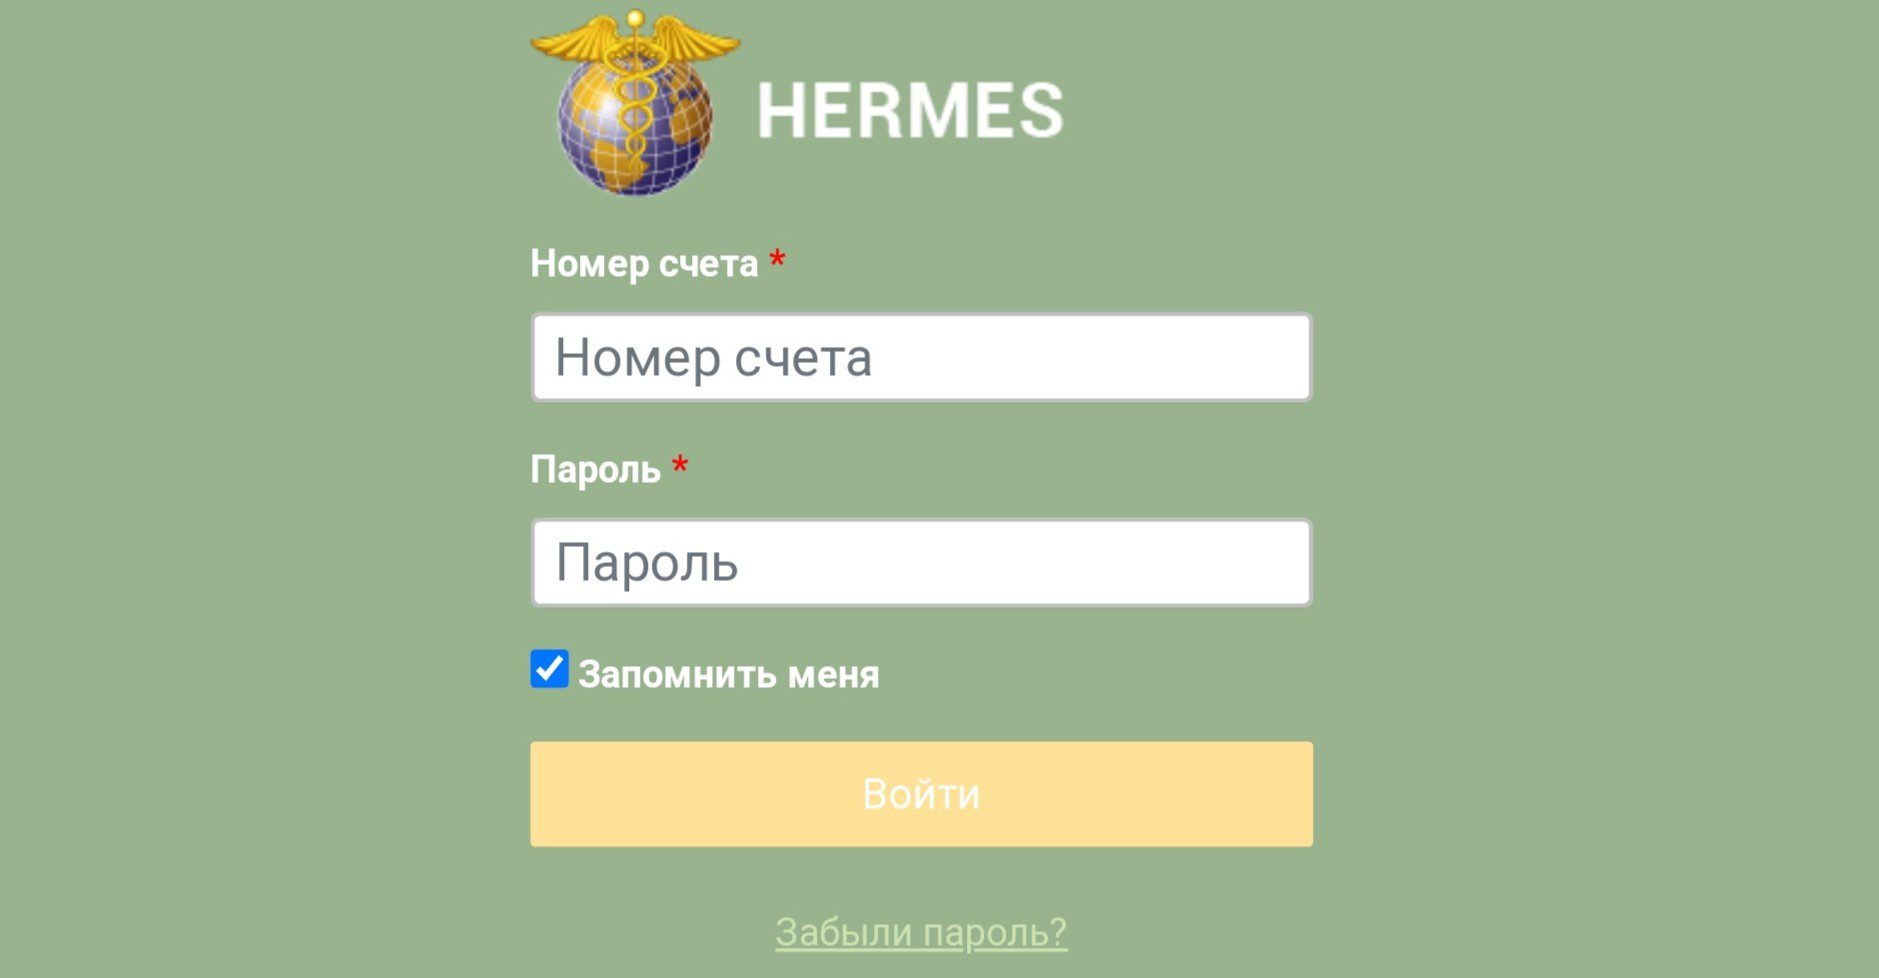 Сайт Hermes Recovery info форма для входа в кабинет